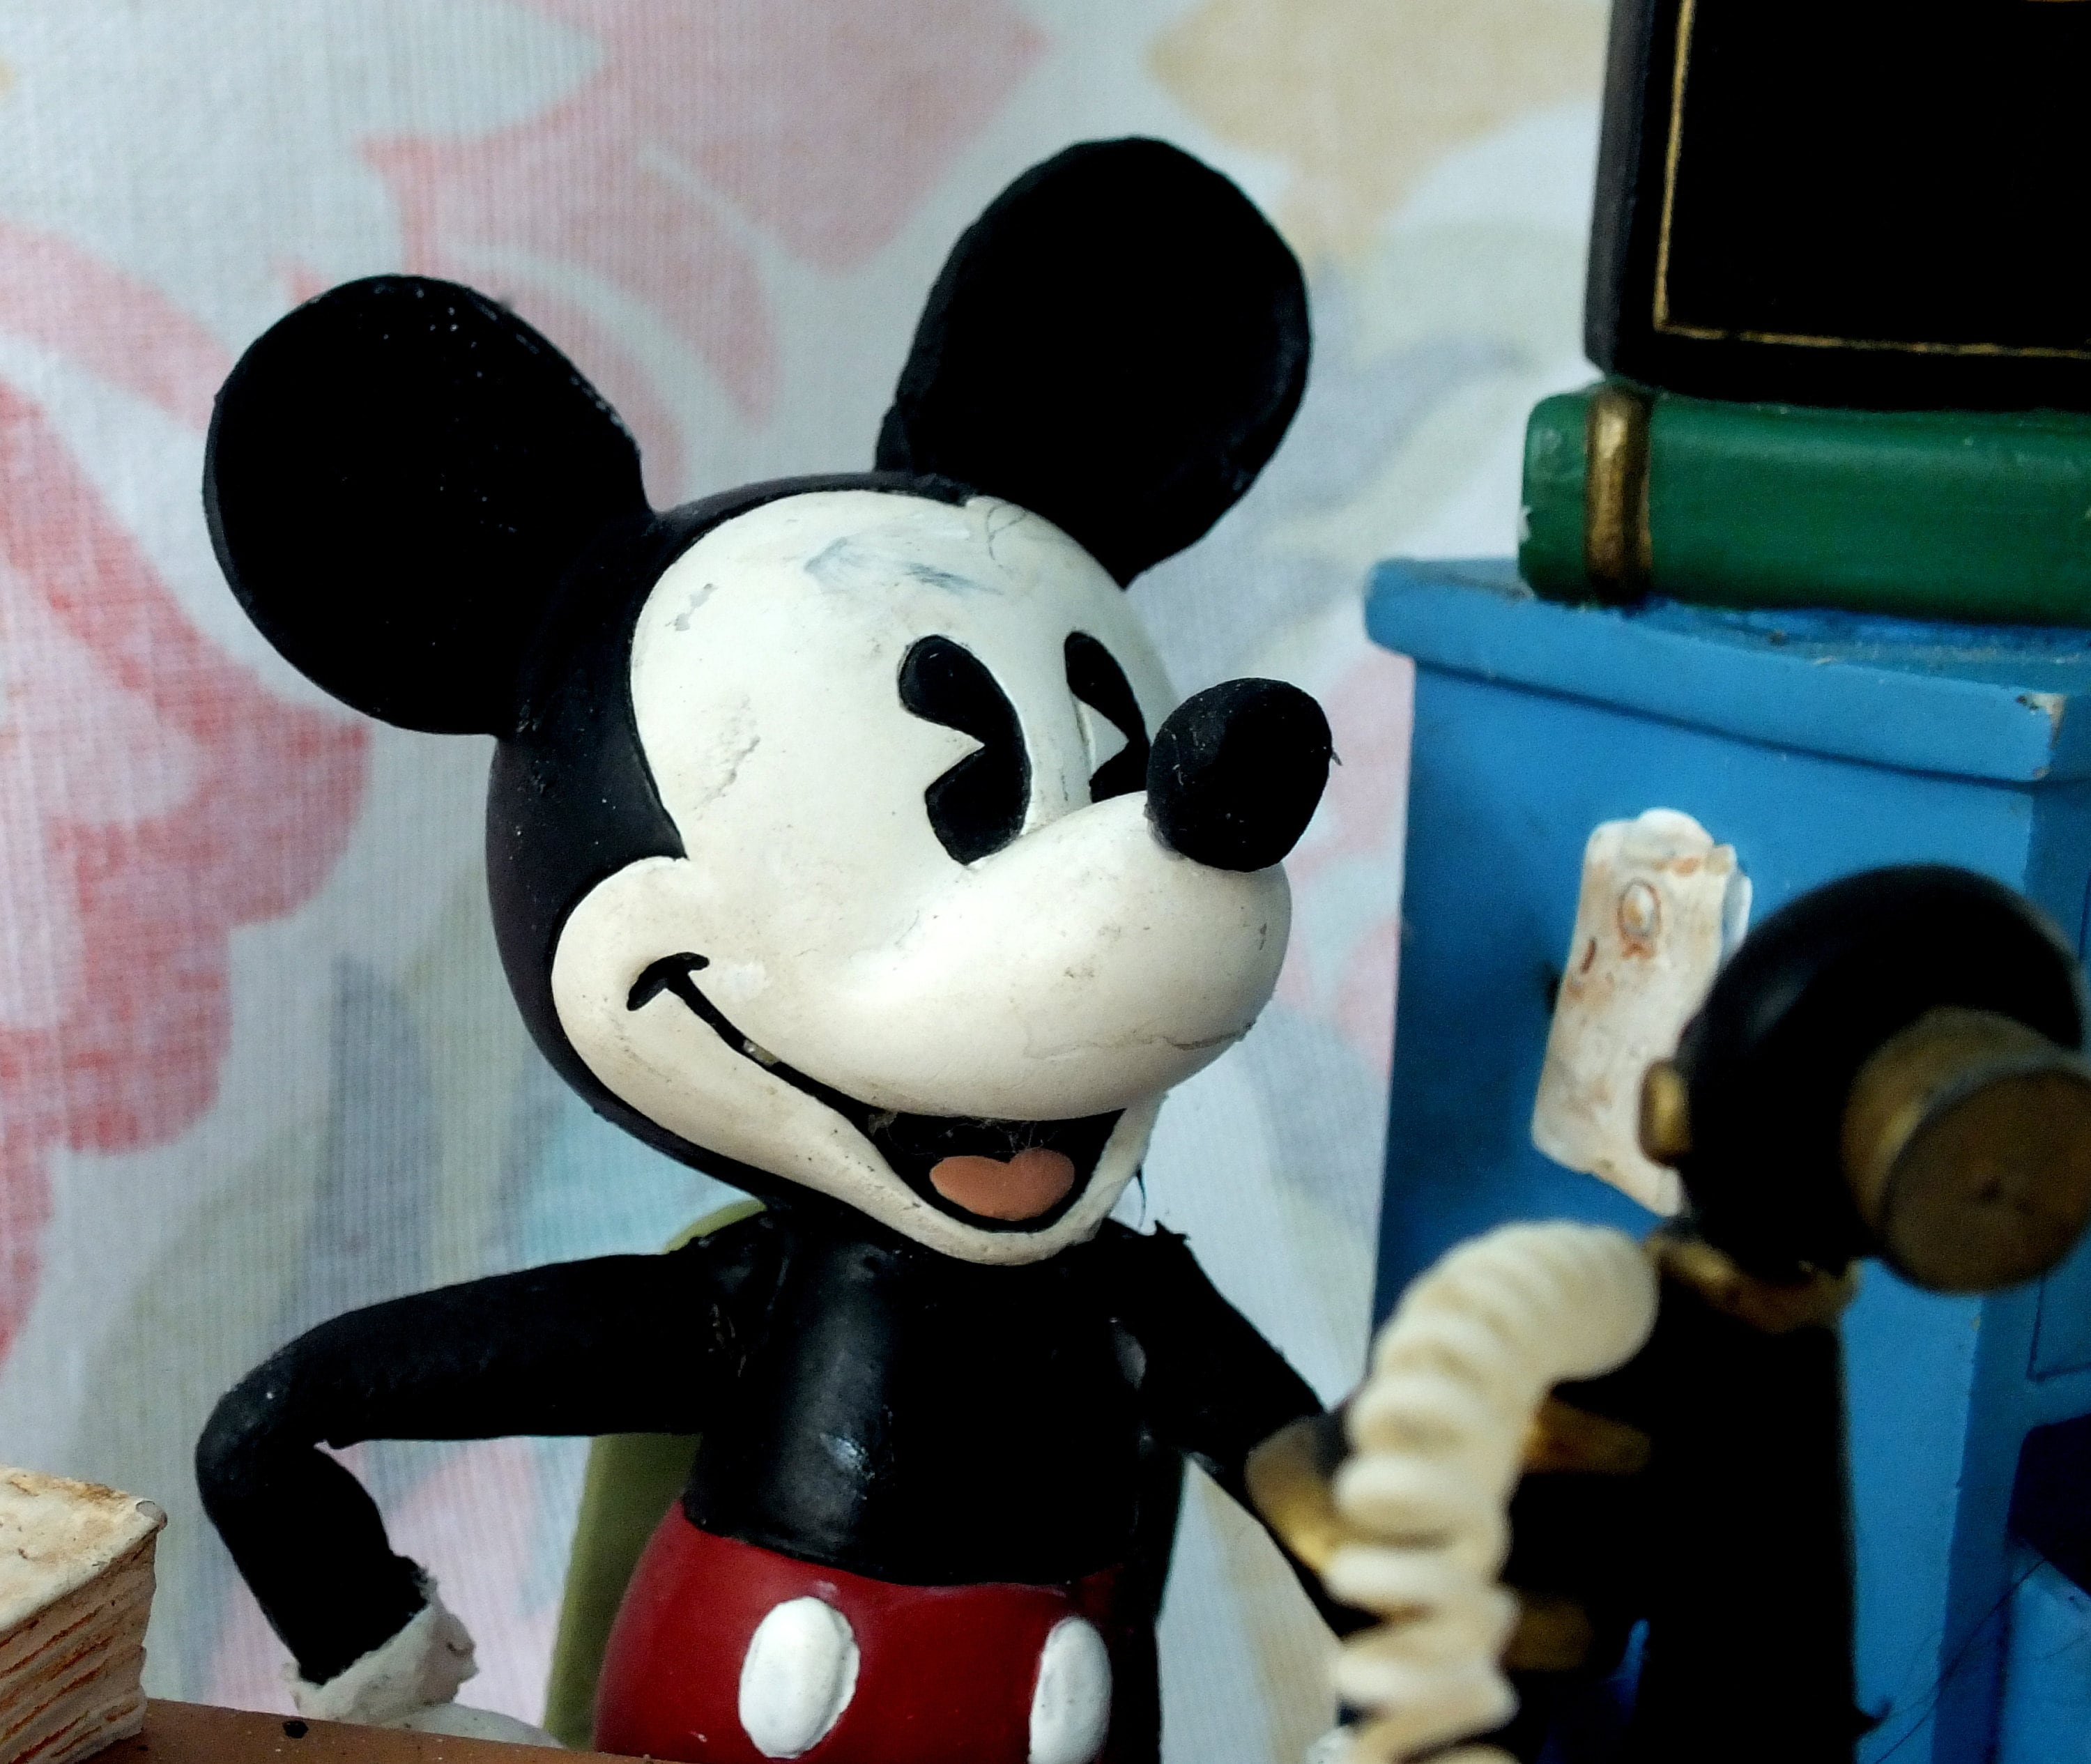 Brand New Mickey Mouse Single Serve Coffee Maker MIB!